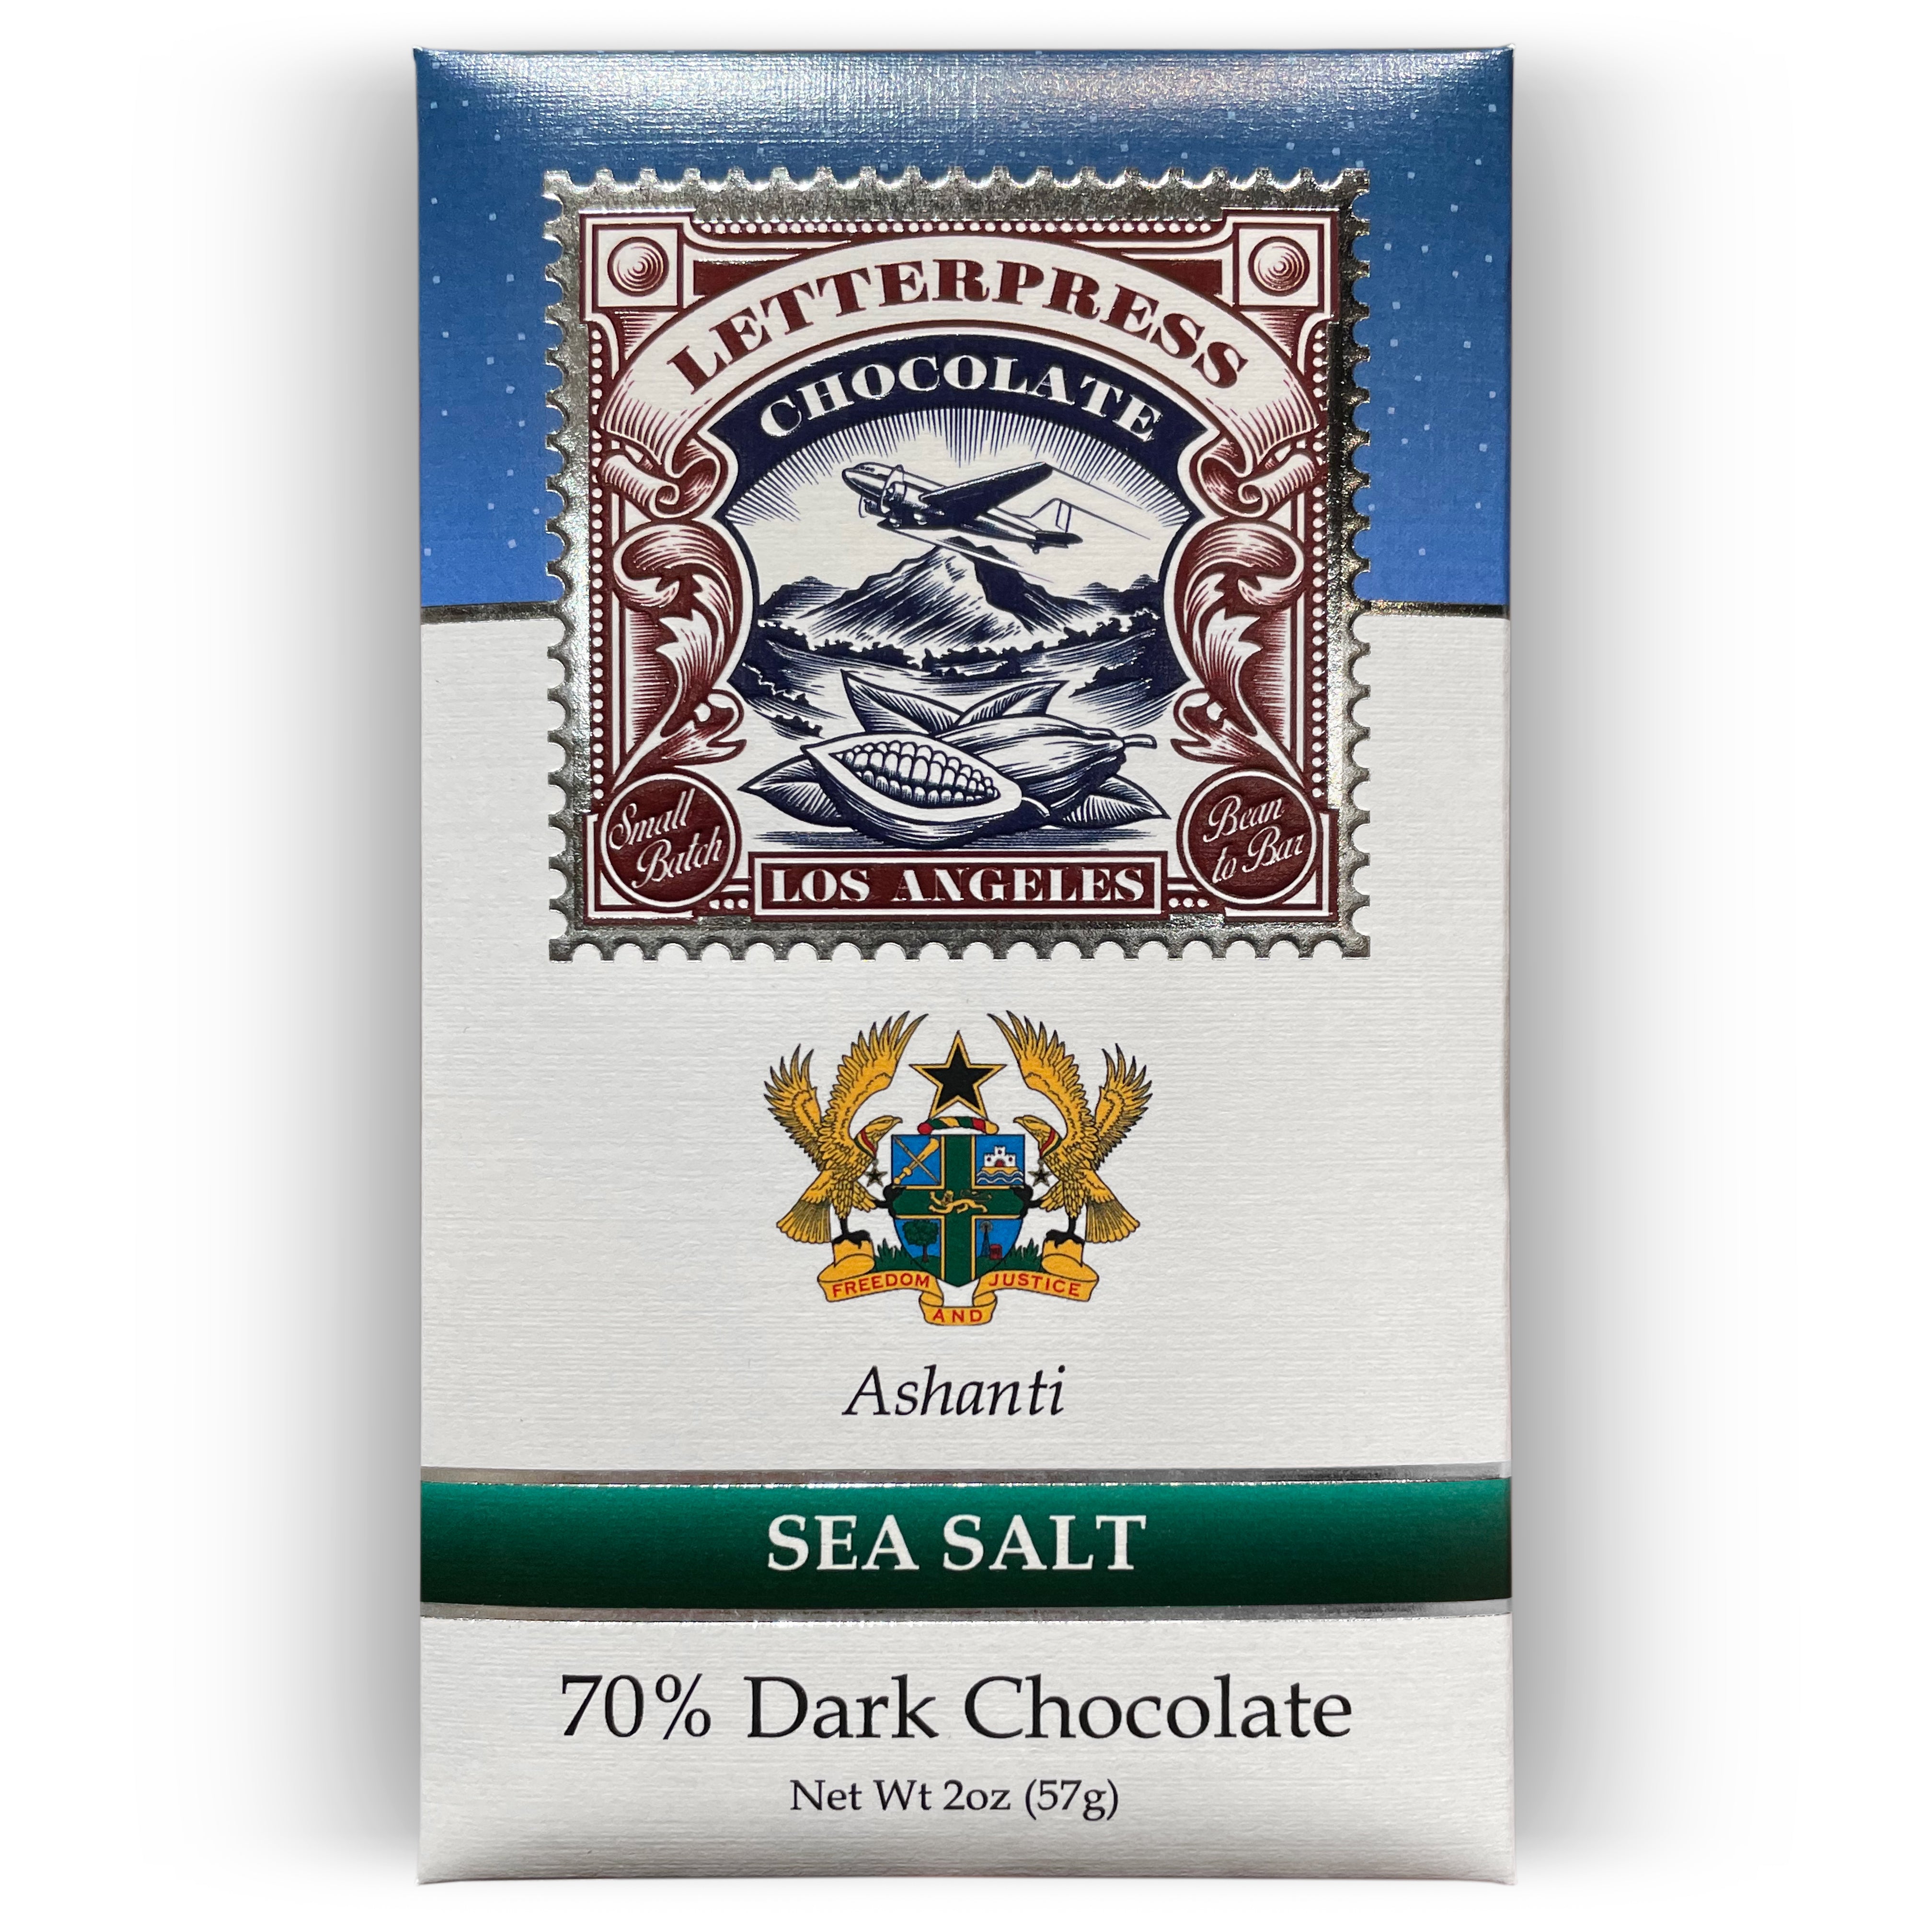 Ashanti Ghana 70% Dark Chocolate with Sea Salt packaging on white background